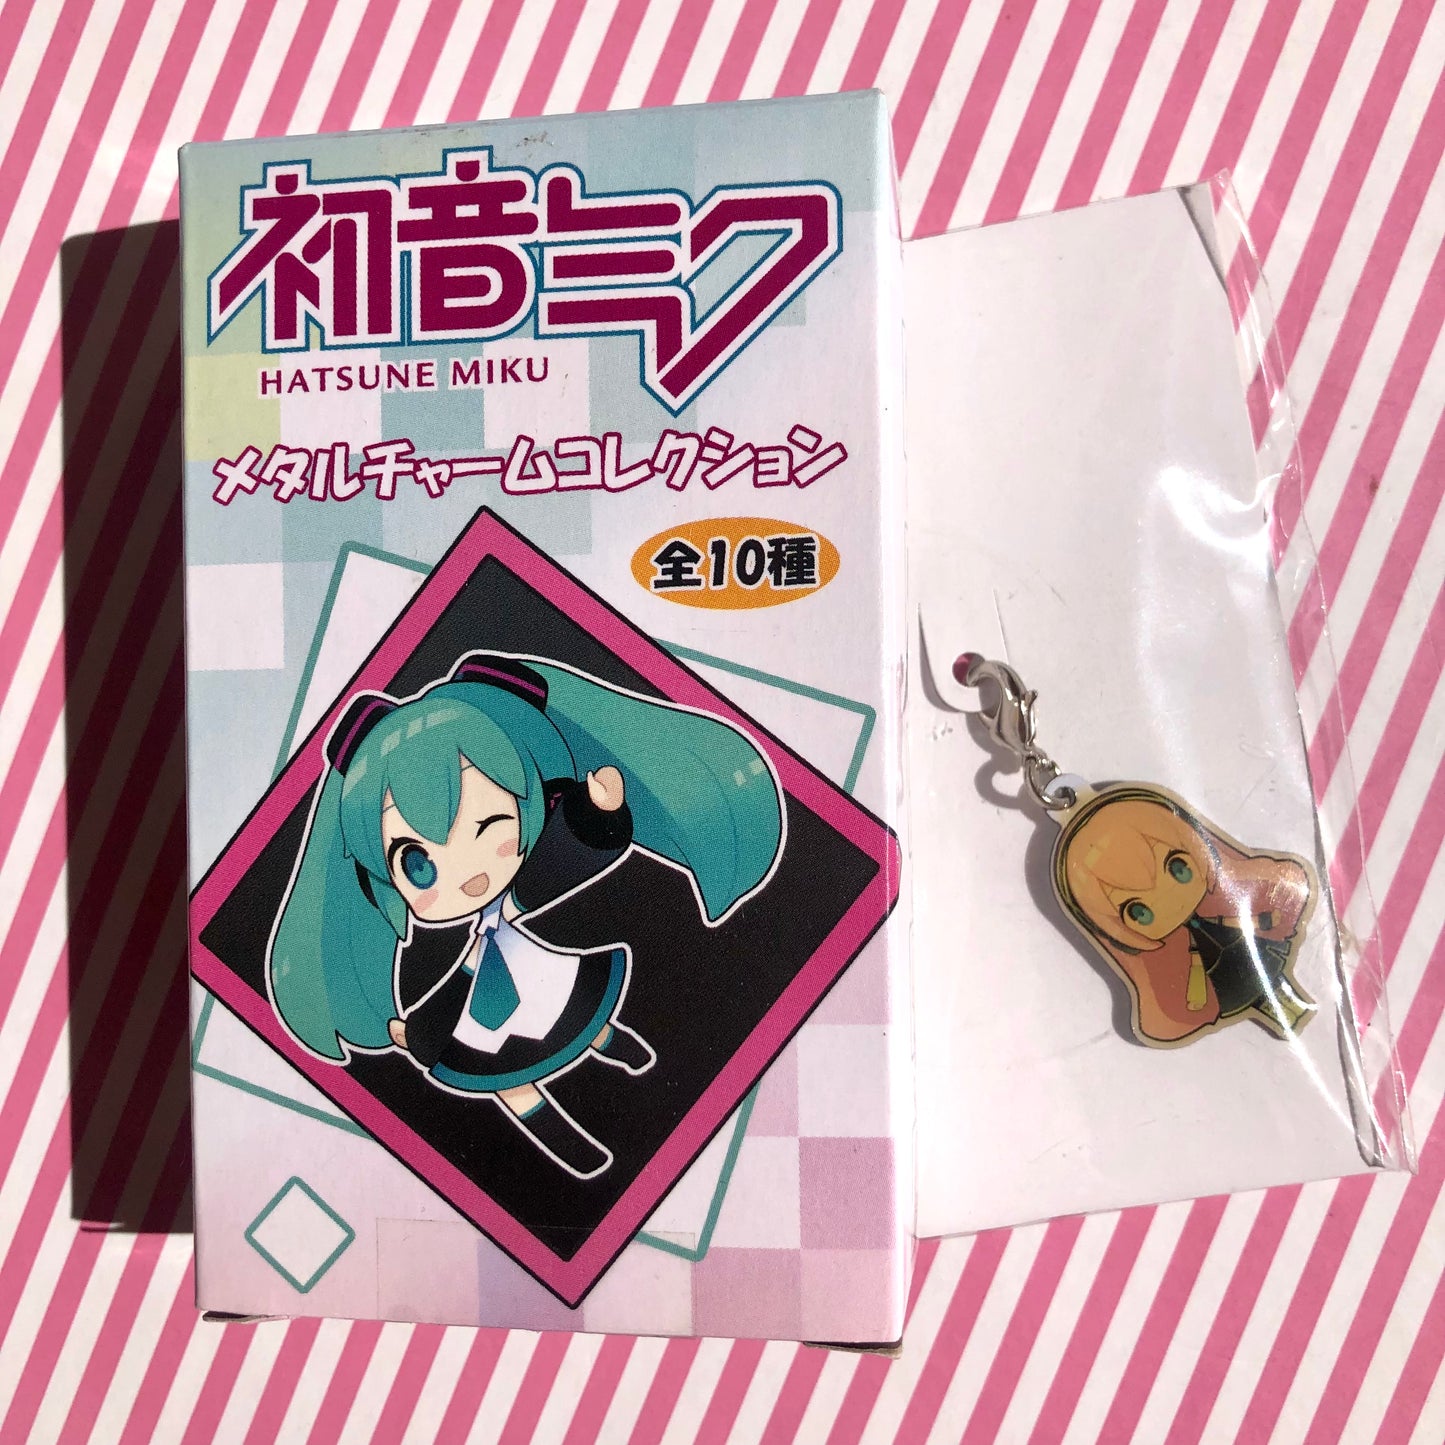 Original Vocaloid Hatsune Miku Acrylic Keychain - Megurine Luka